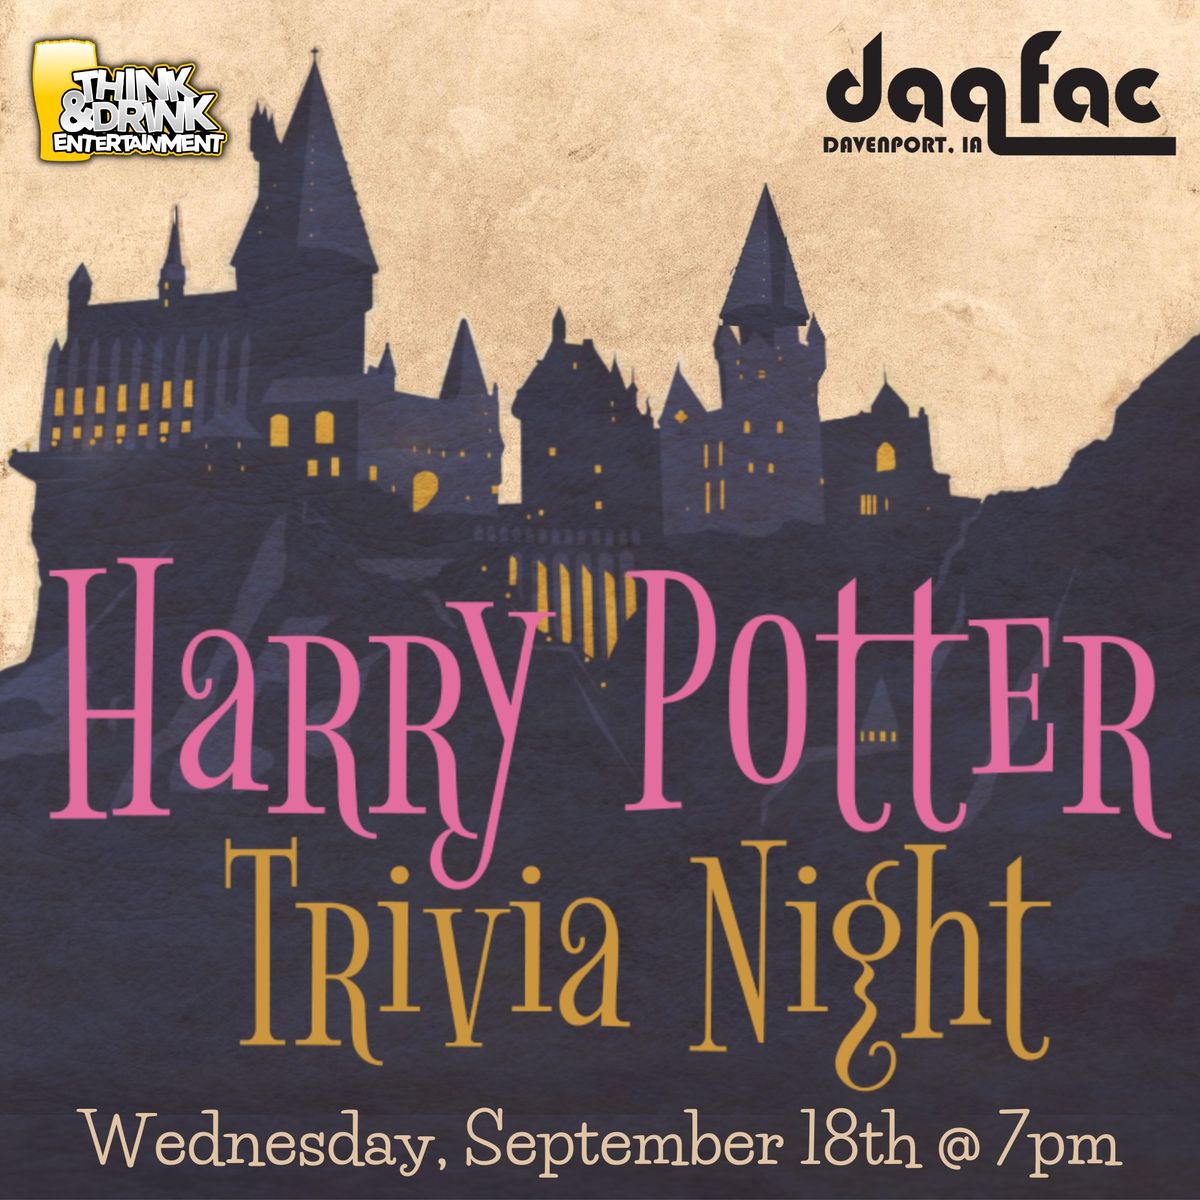 Harry Potter Trivia Night @ Daiquiri Factory (Davenport, IA) \/ Wed Sept 18th @ 7pm